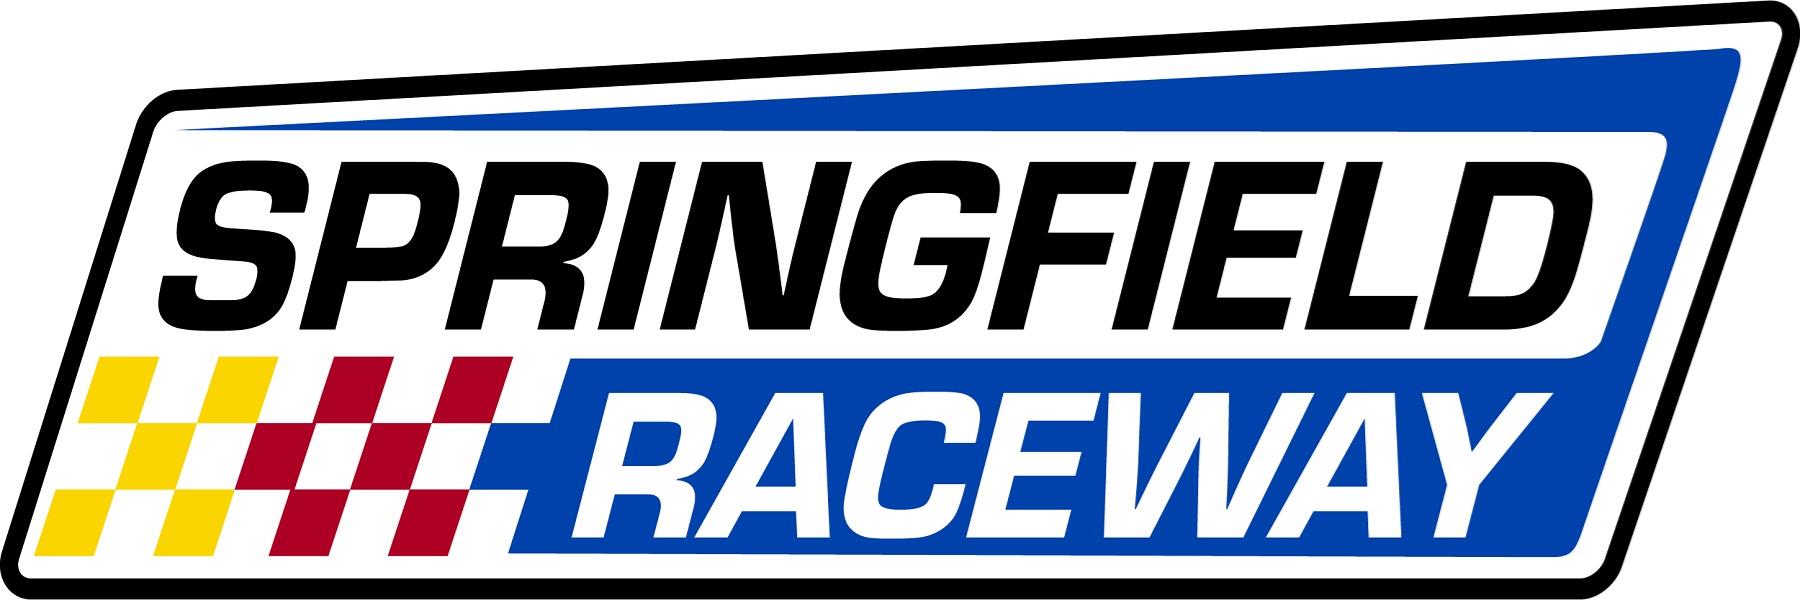 8/10/2019 - Springfield Raceway